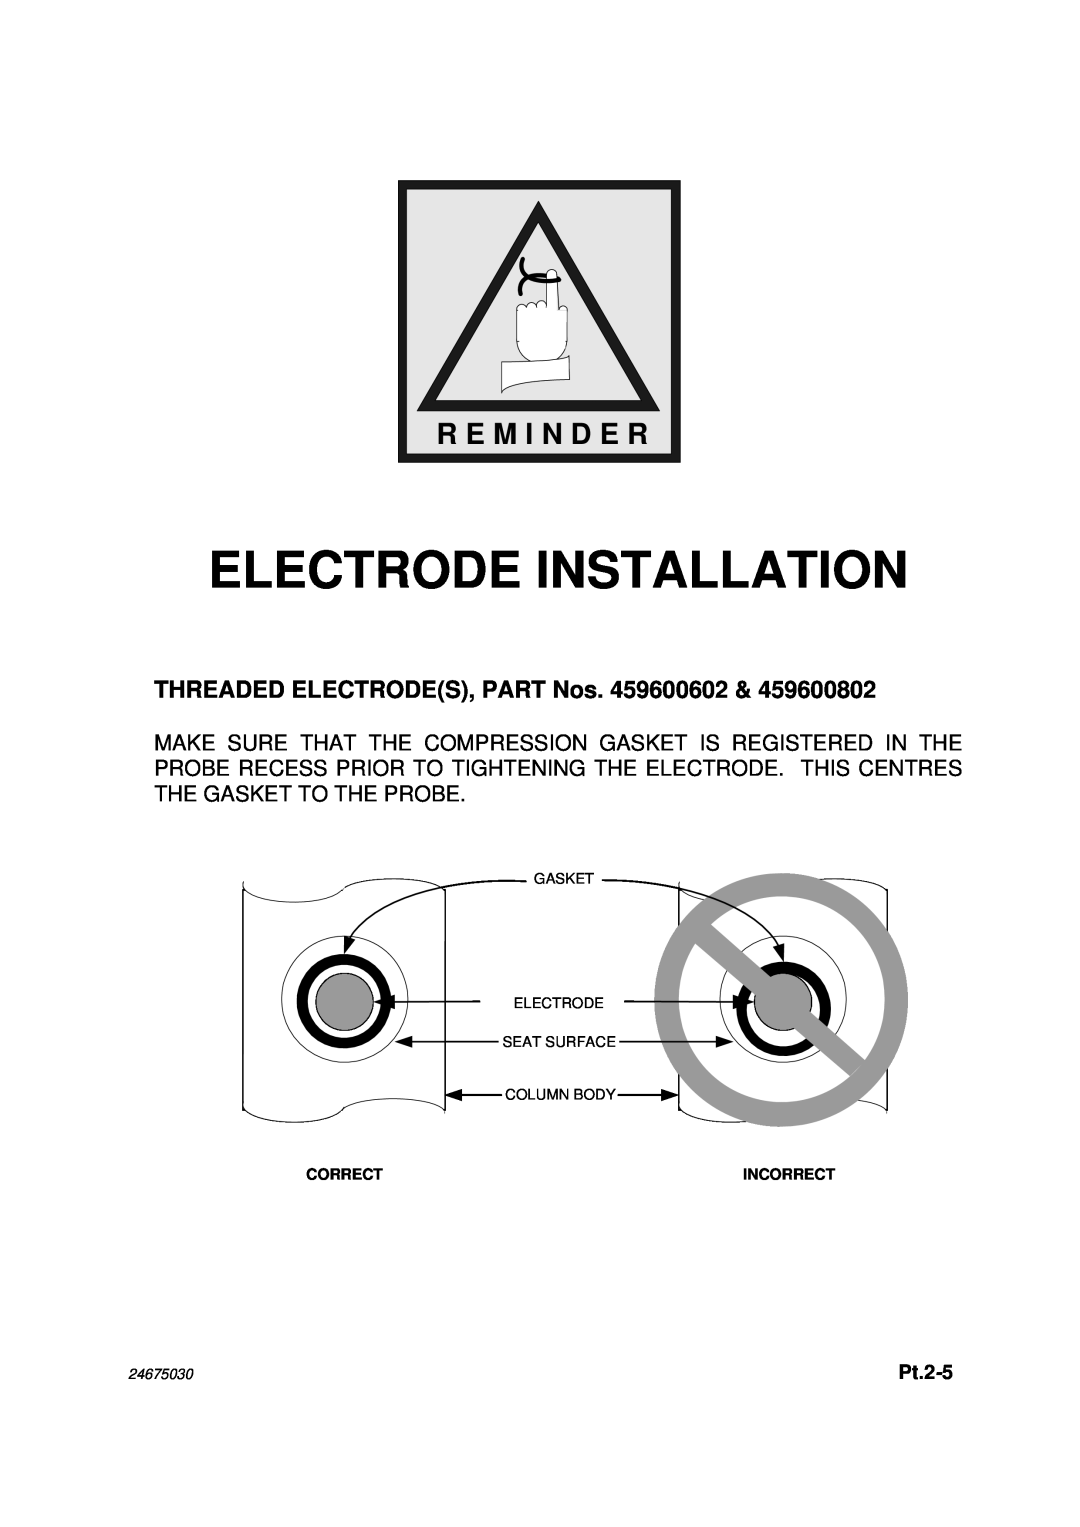 Emerson 2468CD, 2468CB manual R E M I N D E R, Electrode Installation, Correct, Incorrect, 24675030 